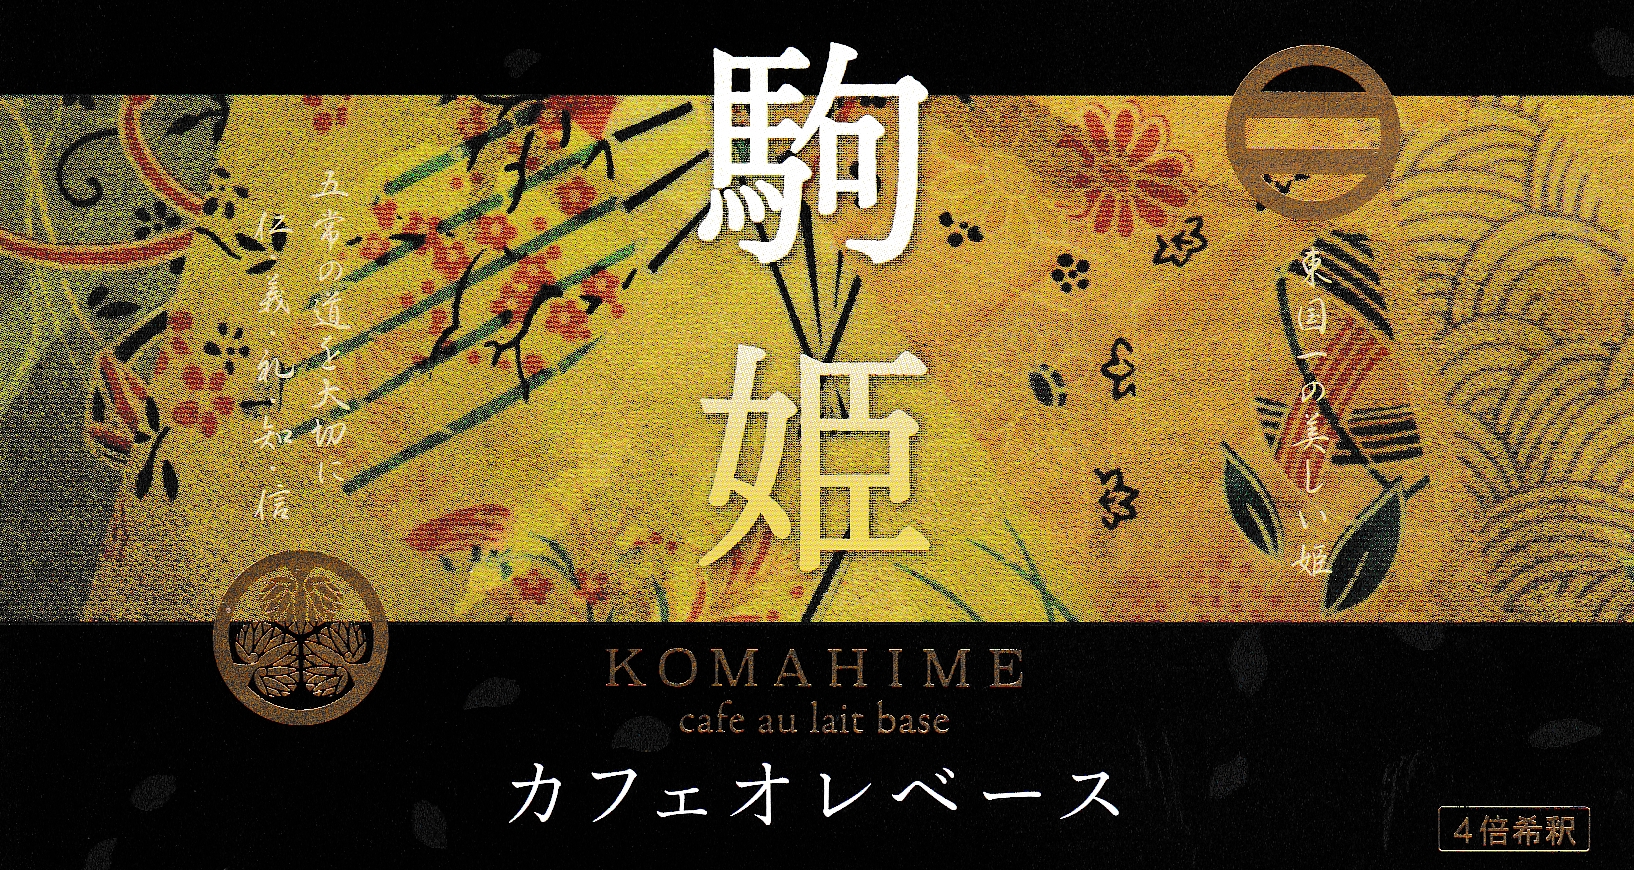 Shinwa Label, Japan for Komahime cafe au lait base submitted by JFLP (Japan)